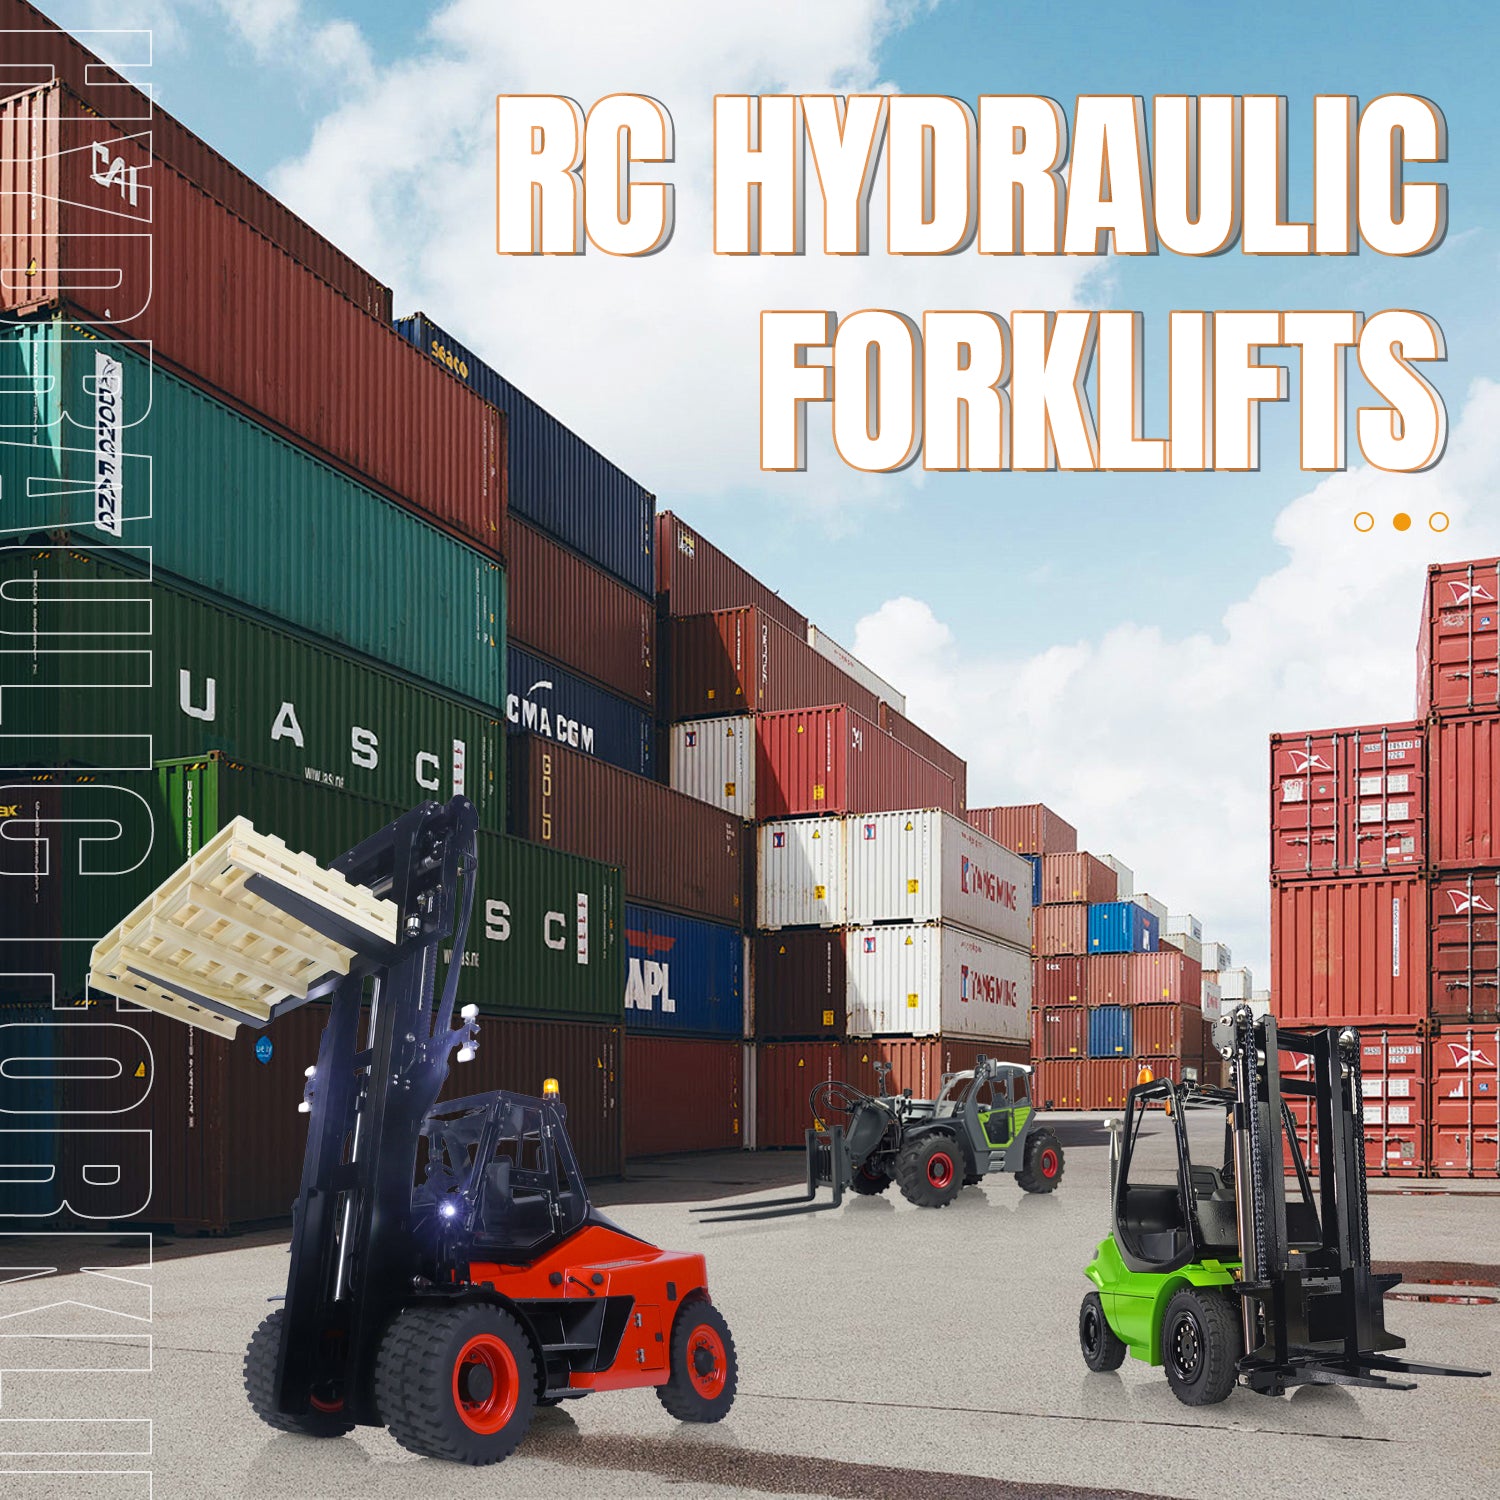 RC Hydraulic Forklifts